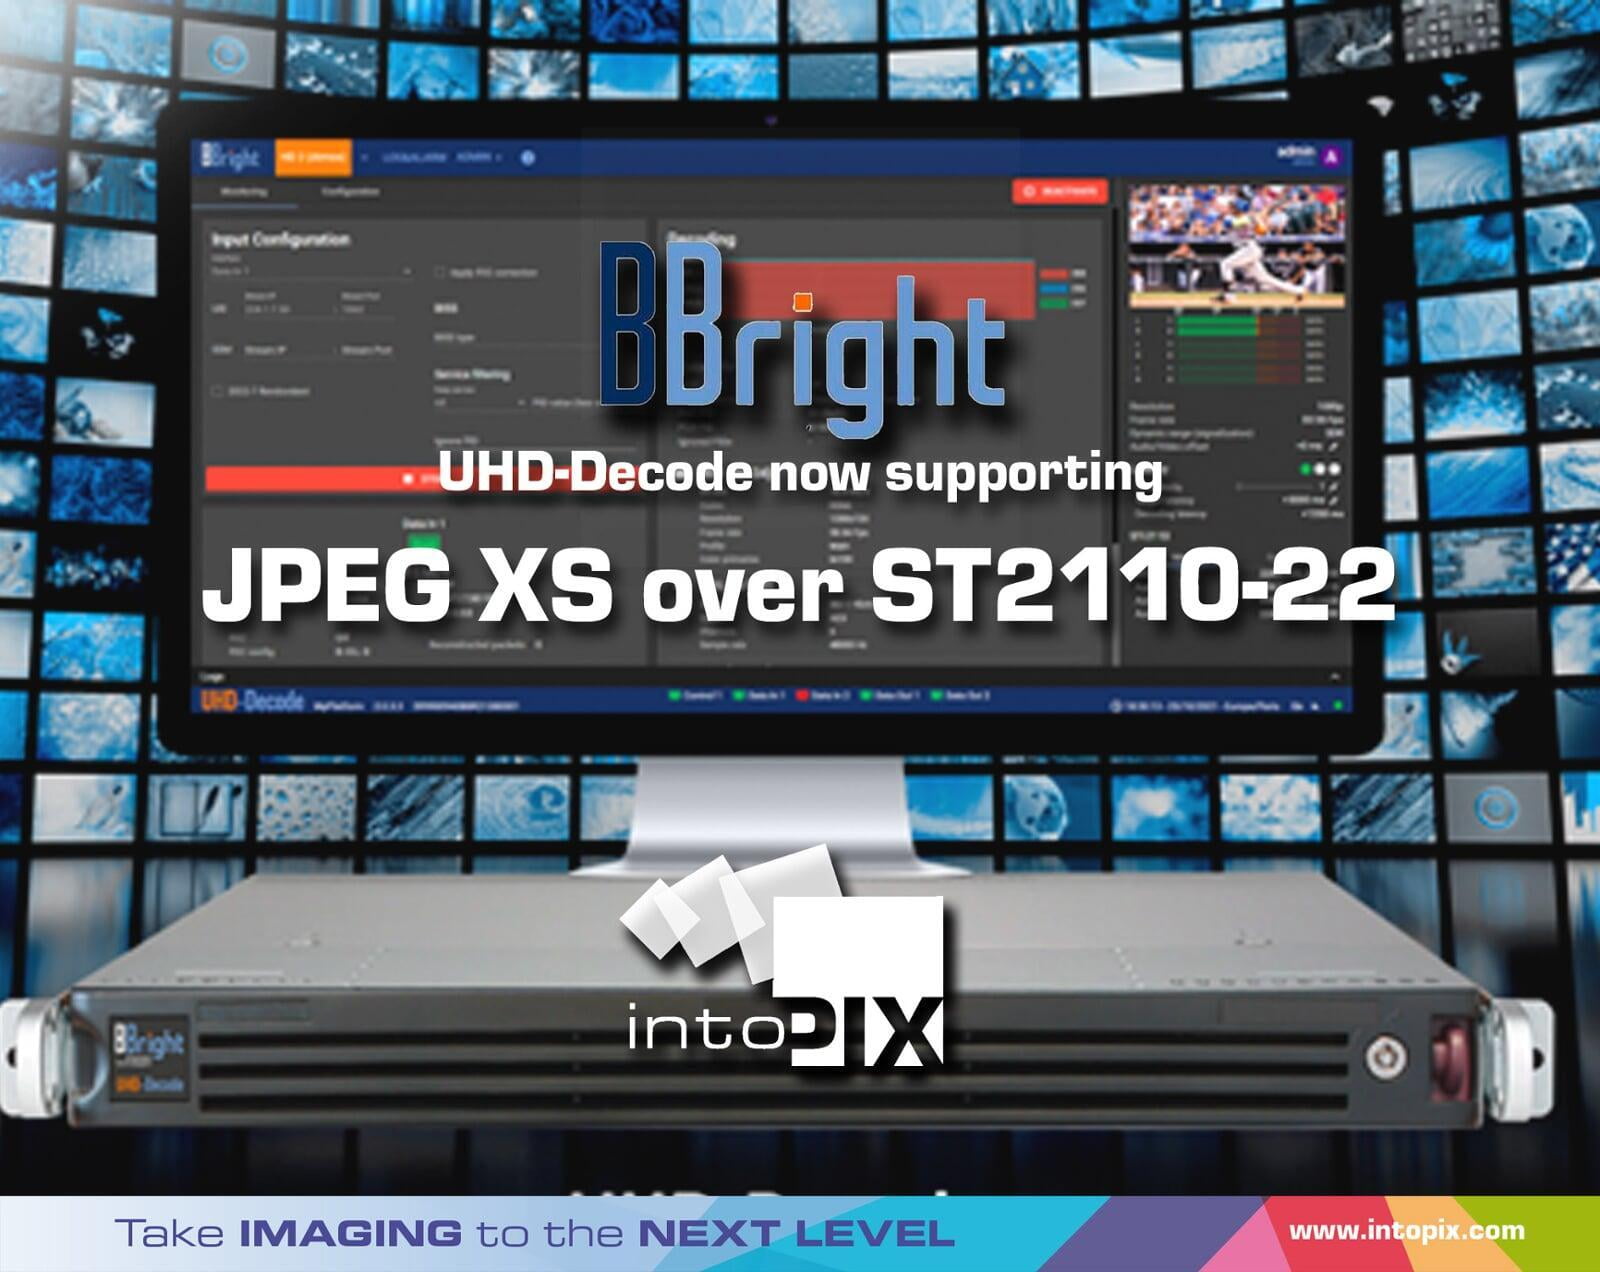 BBright UHD Media Gateway integrates intoPIX JPEG XS technology 